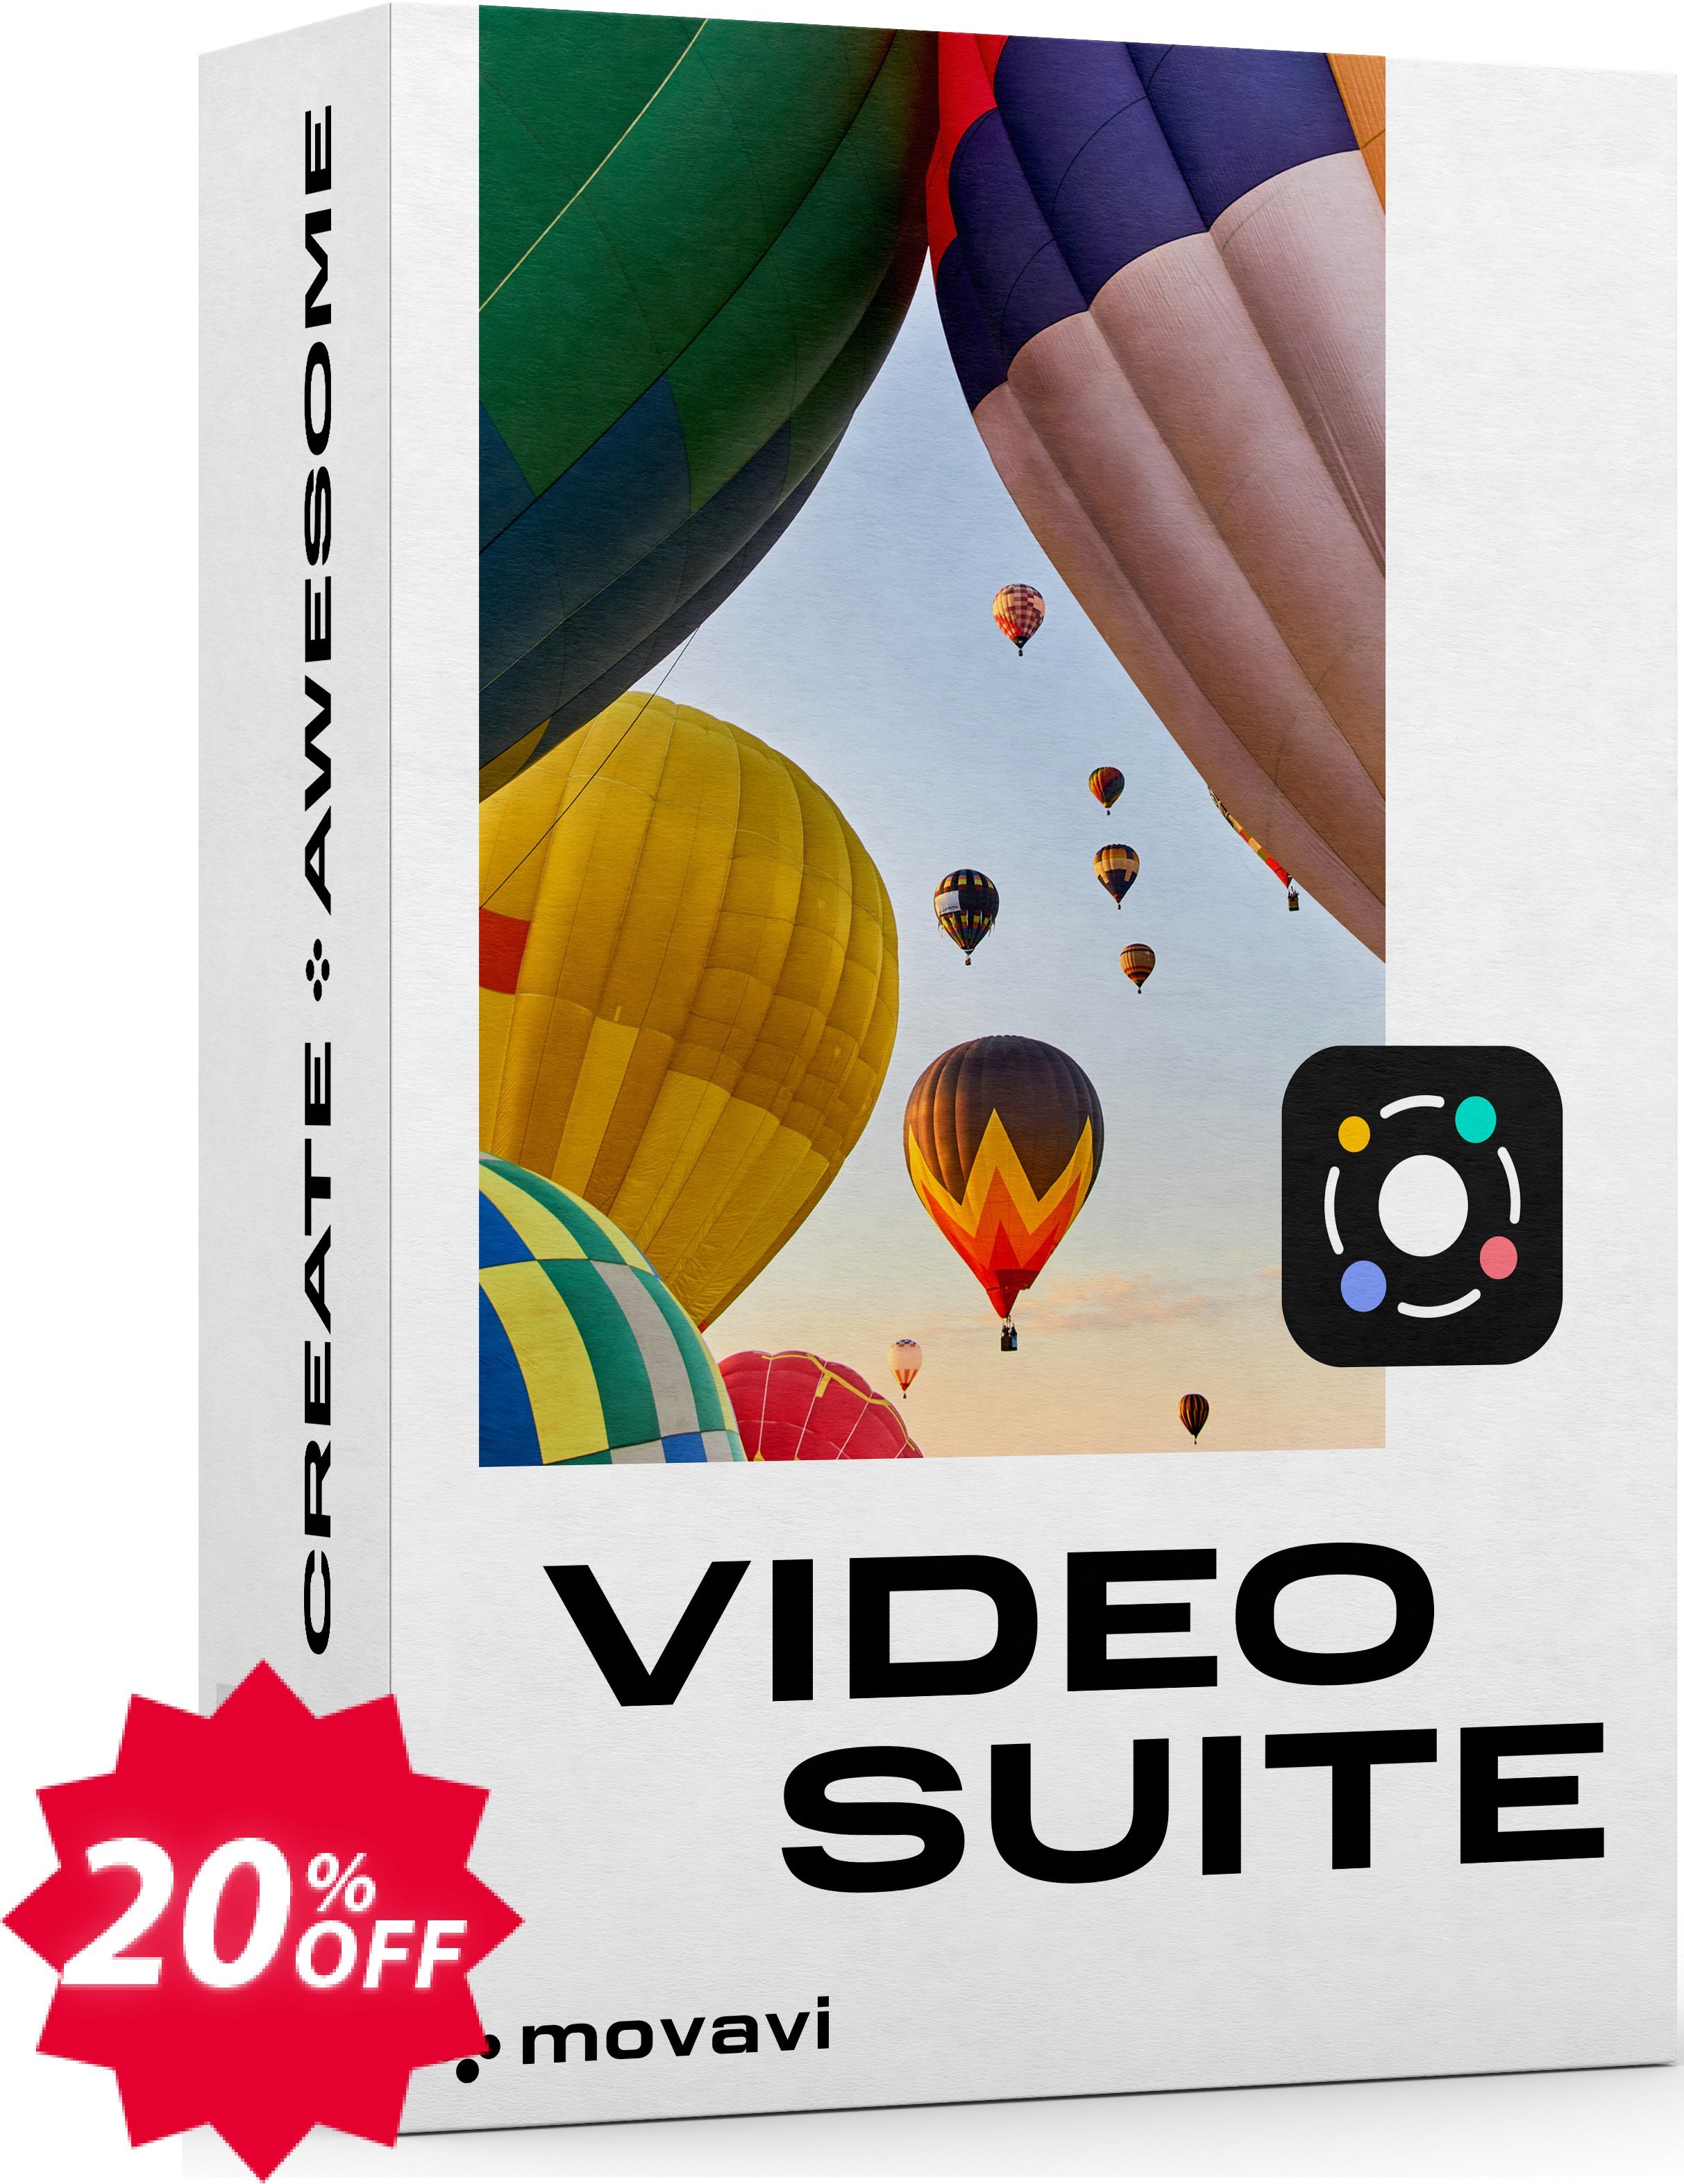 Movavi Bundle: Video Suite + Premium Support Coupon code 20% discount 